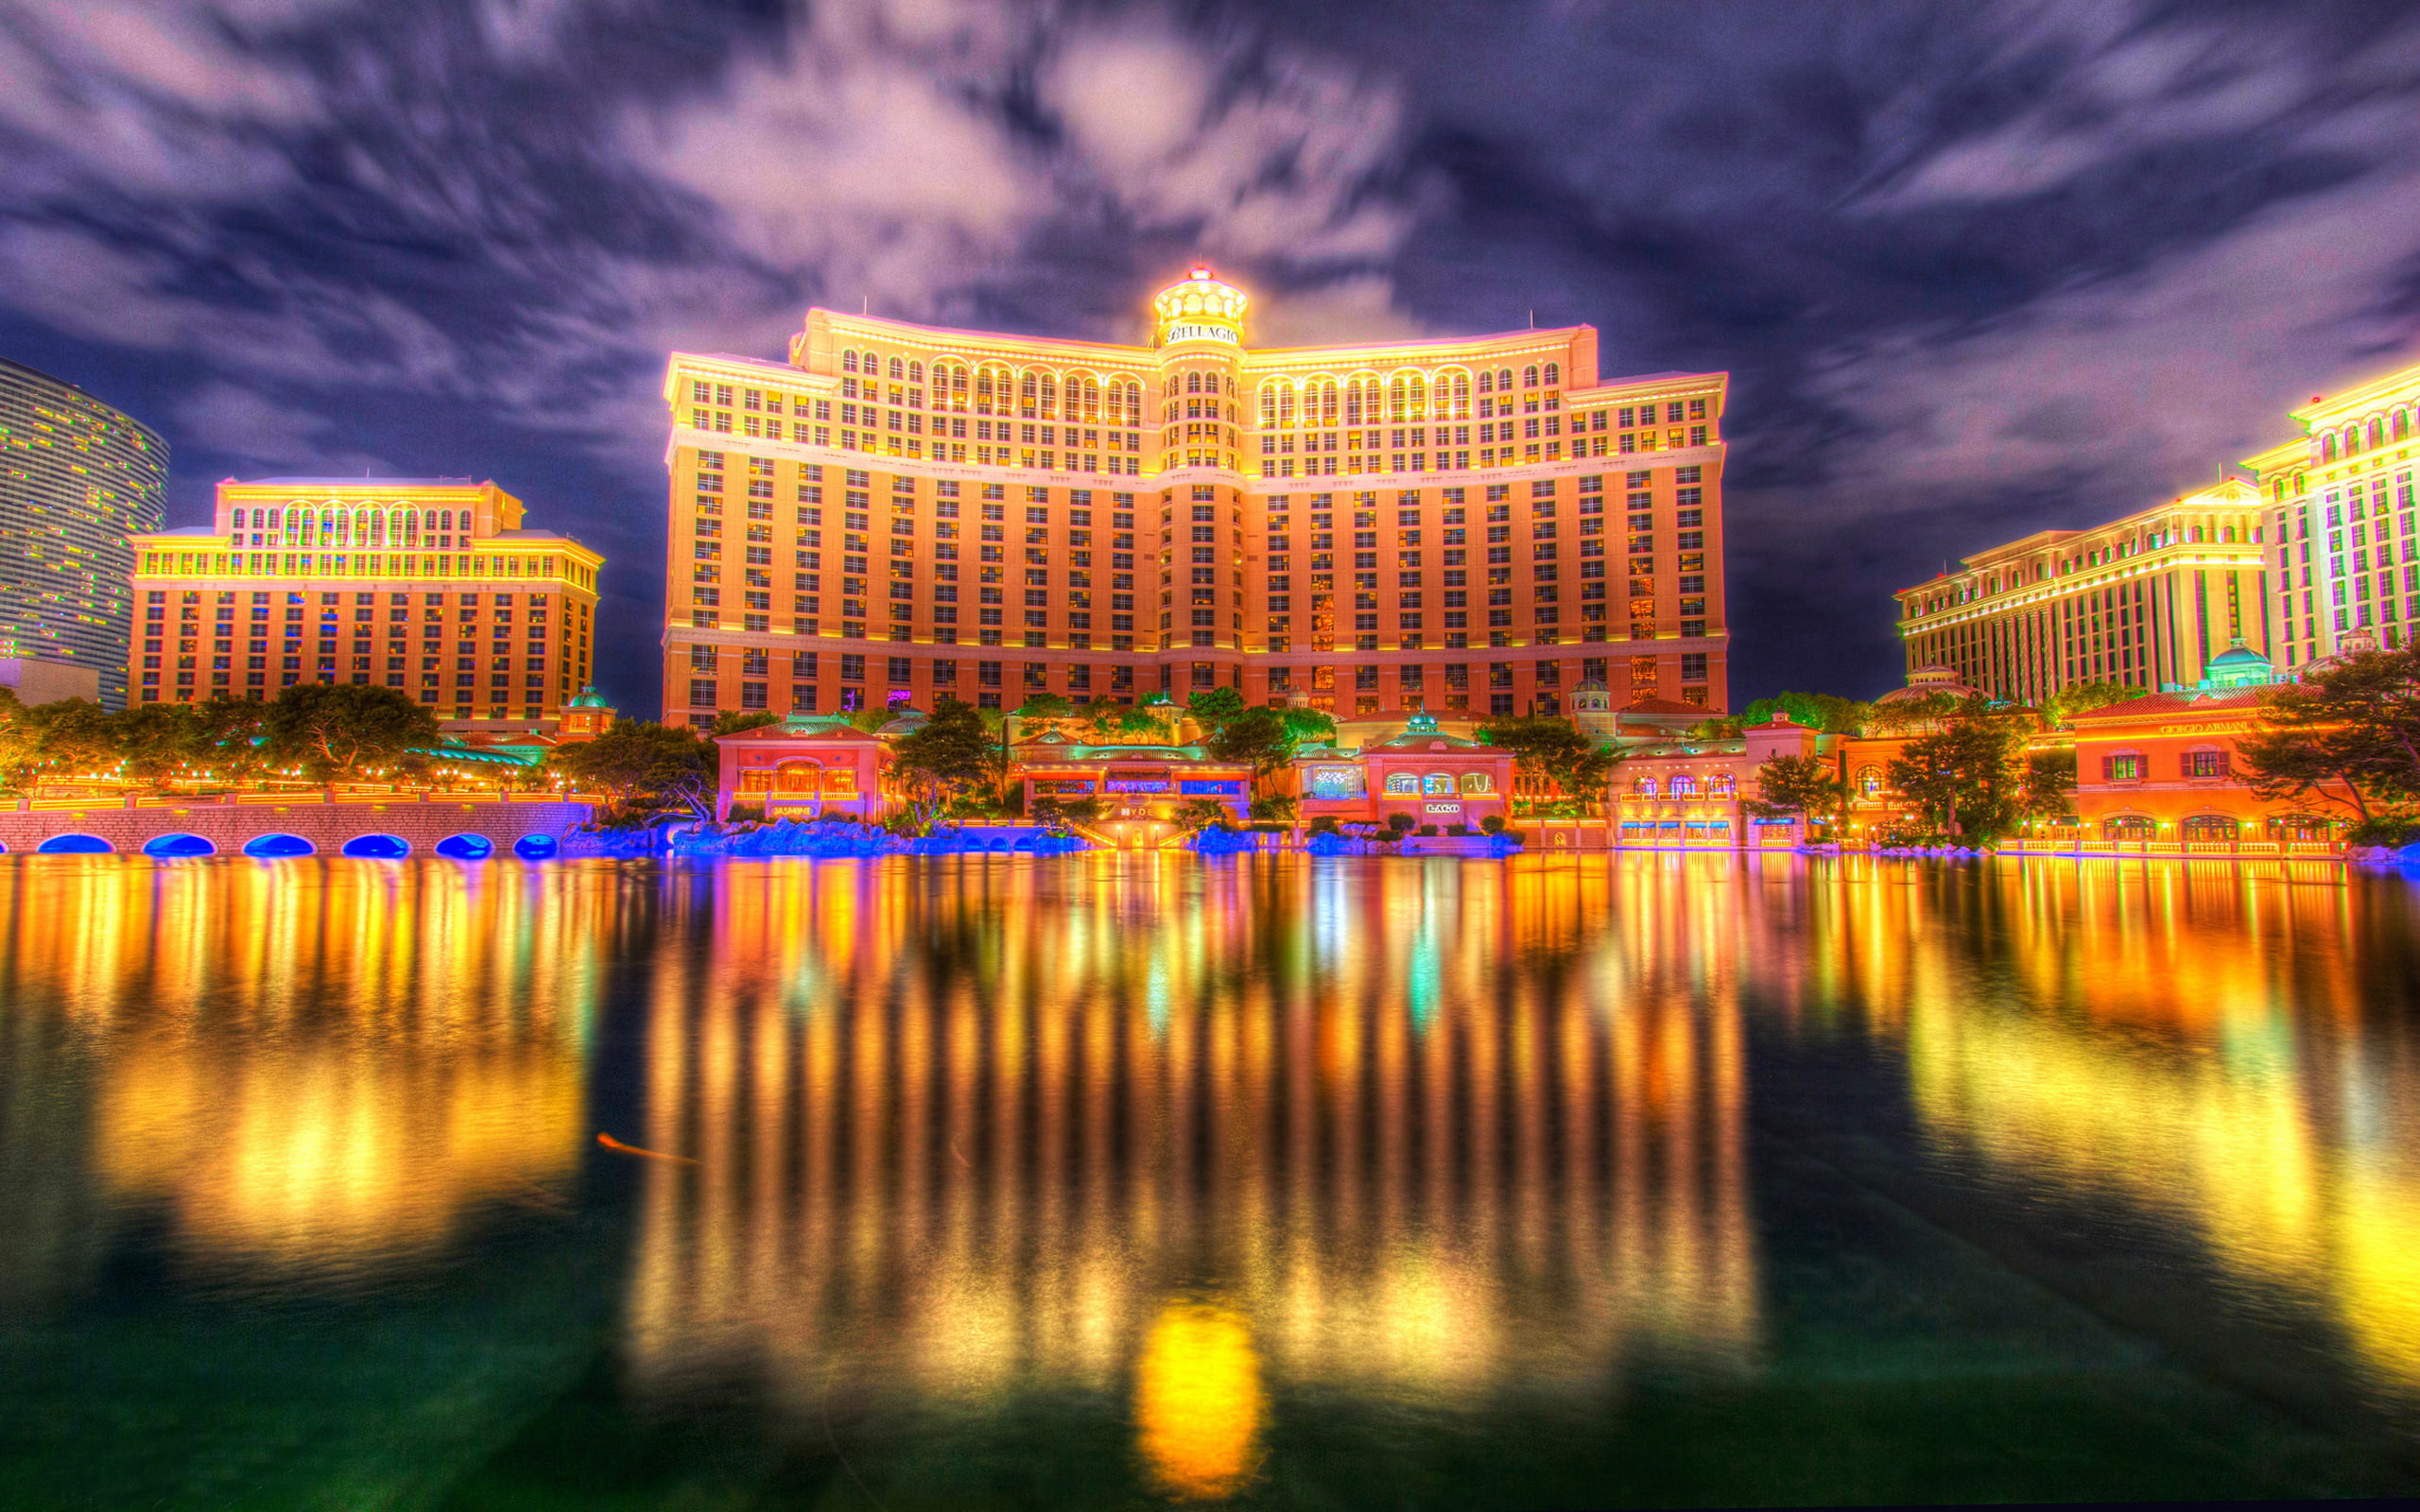 Las Vegas Bellagio Luxury Hotel And Casino Reflection In The Lake Desktop Wallpaper Hd Resolution 2560×1600